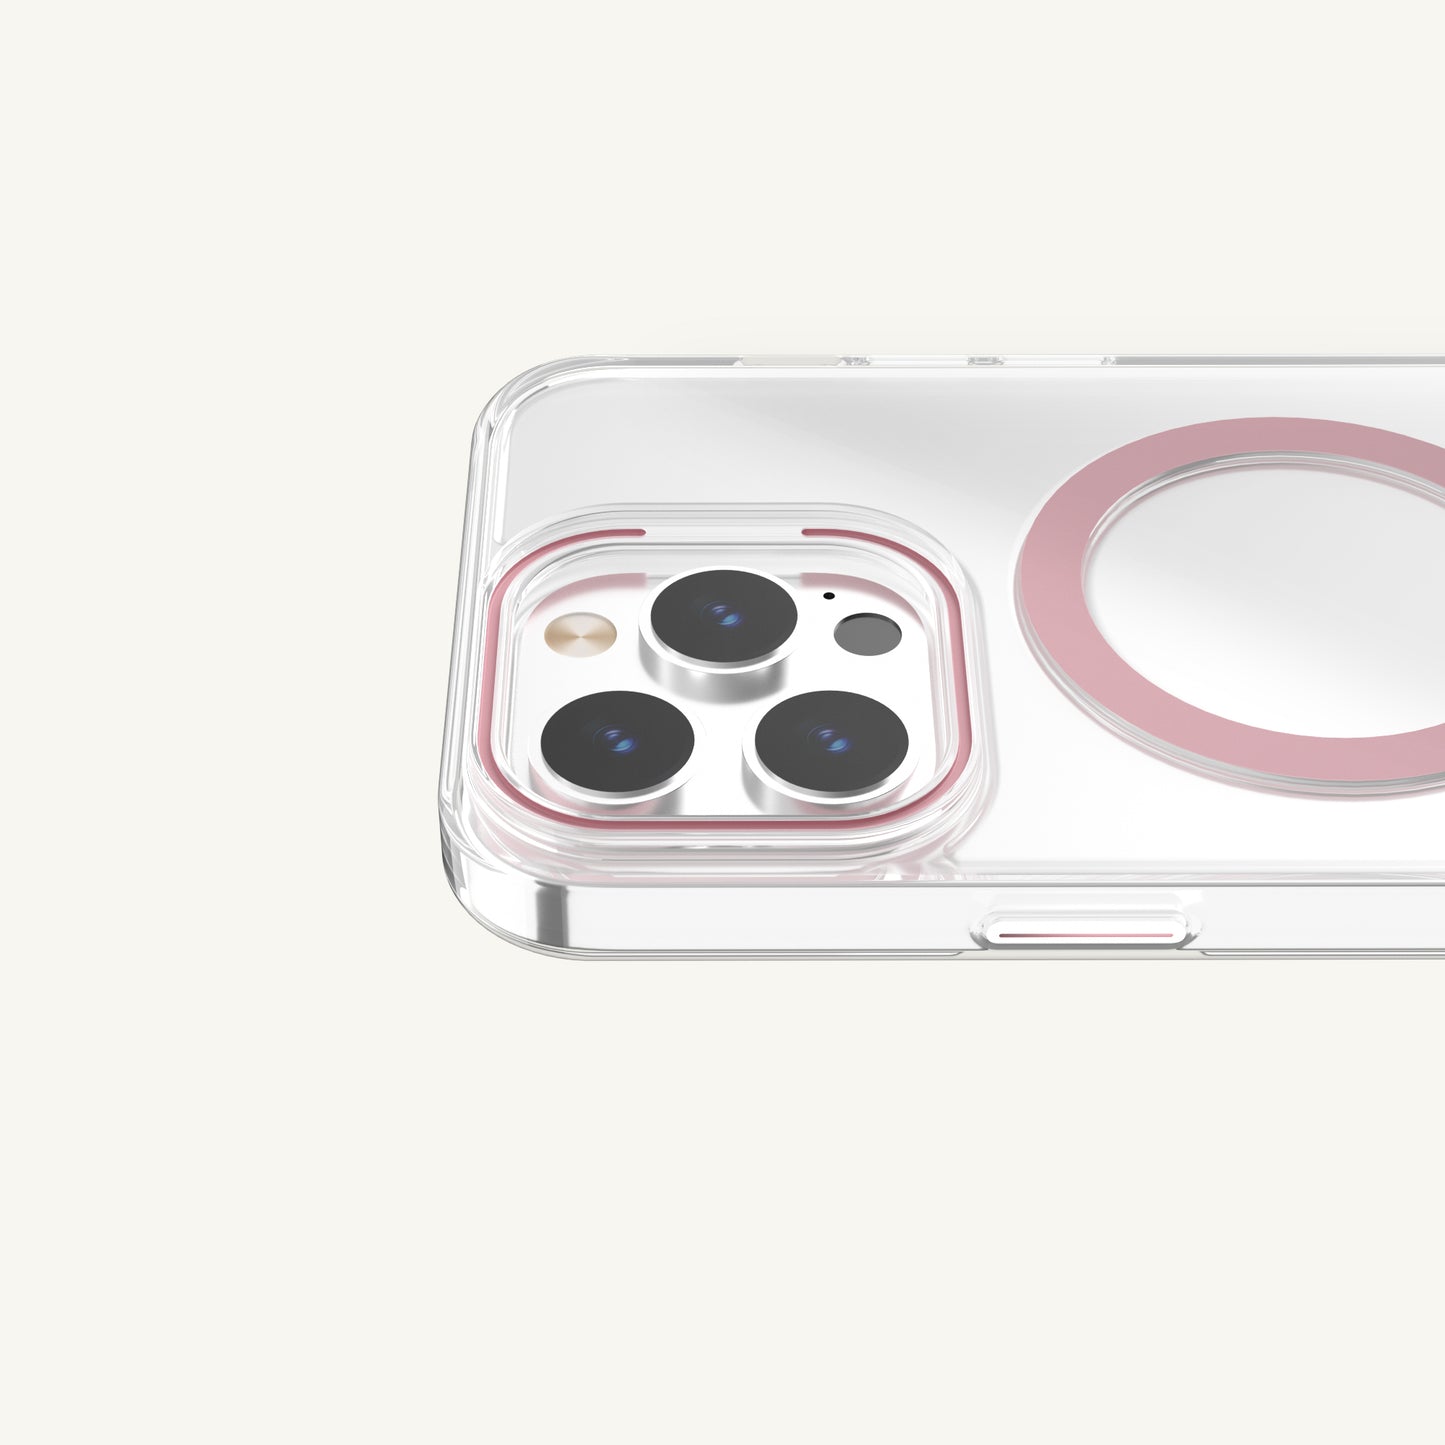 Funda Transparente MagSafe iPhone Color Rosa